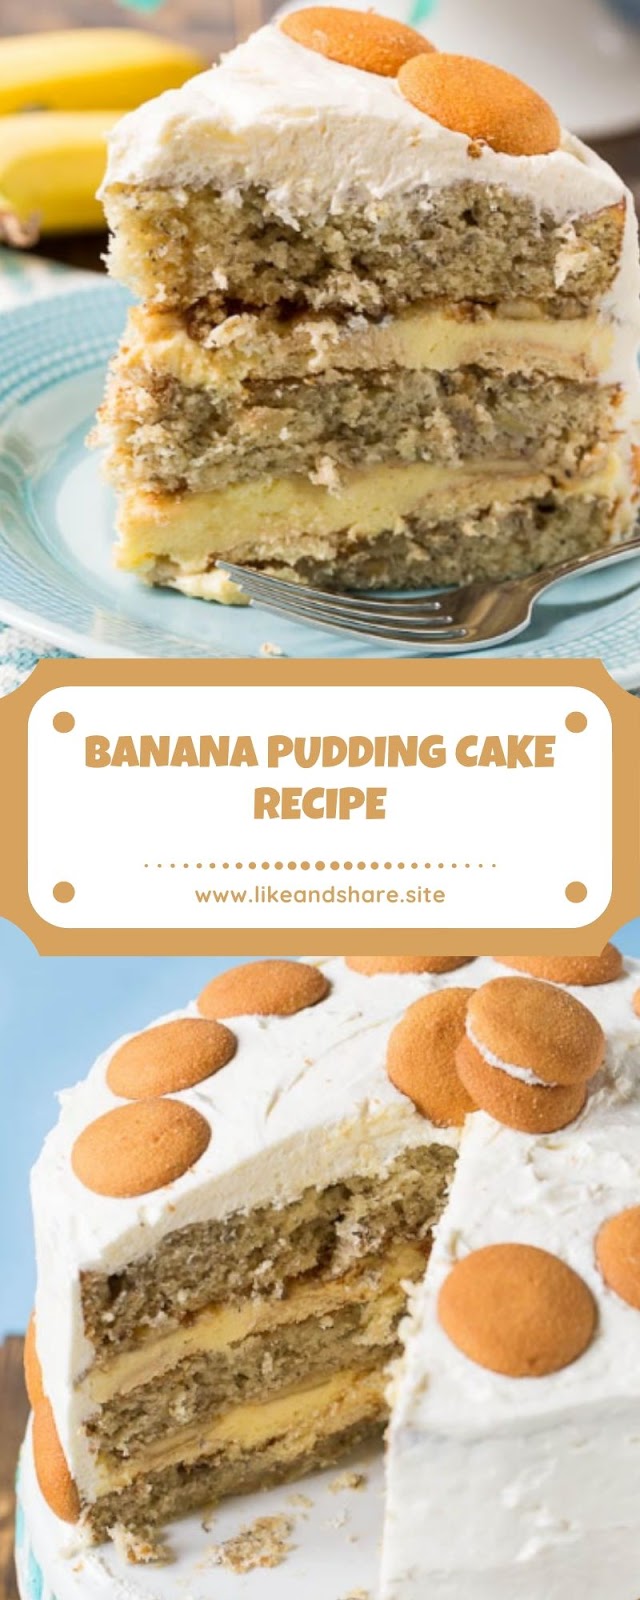 BANANA PUDDING CAKE RECIPE